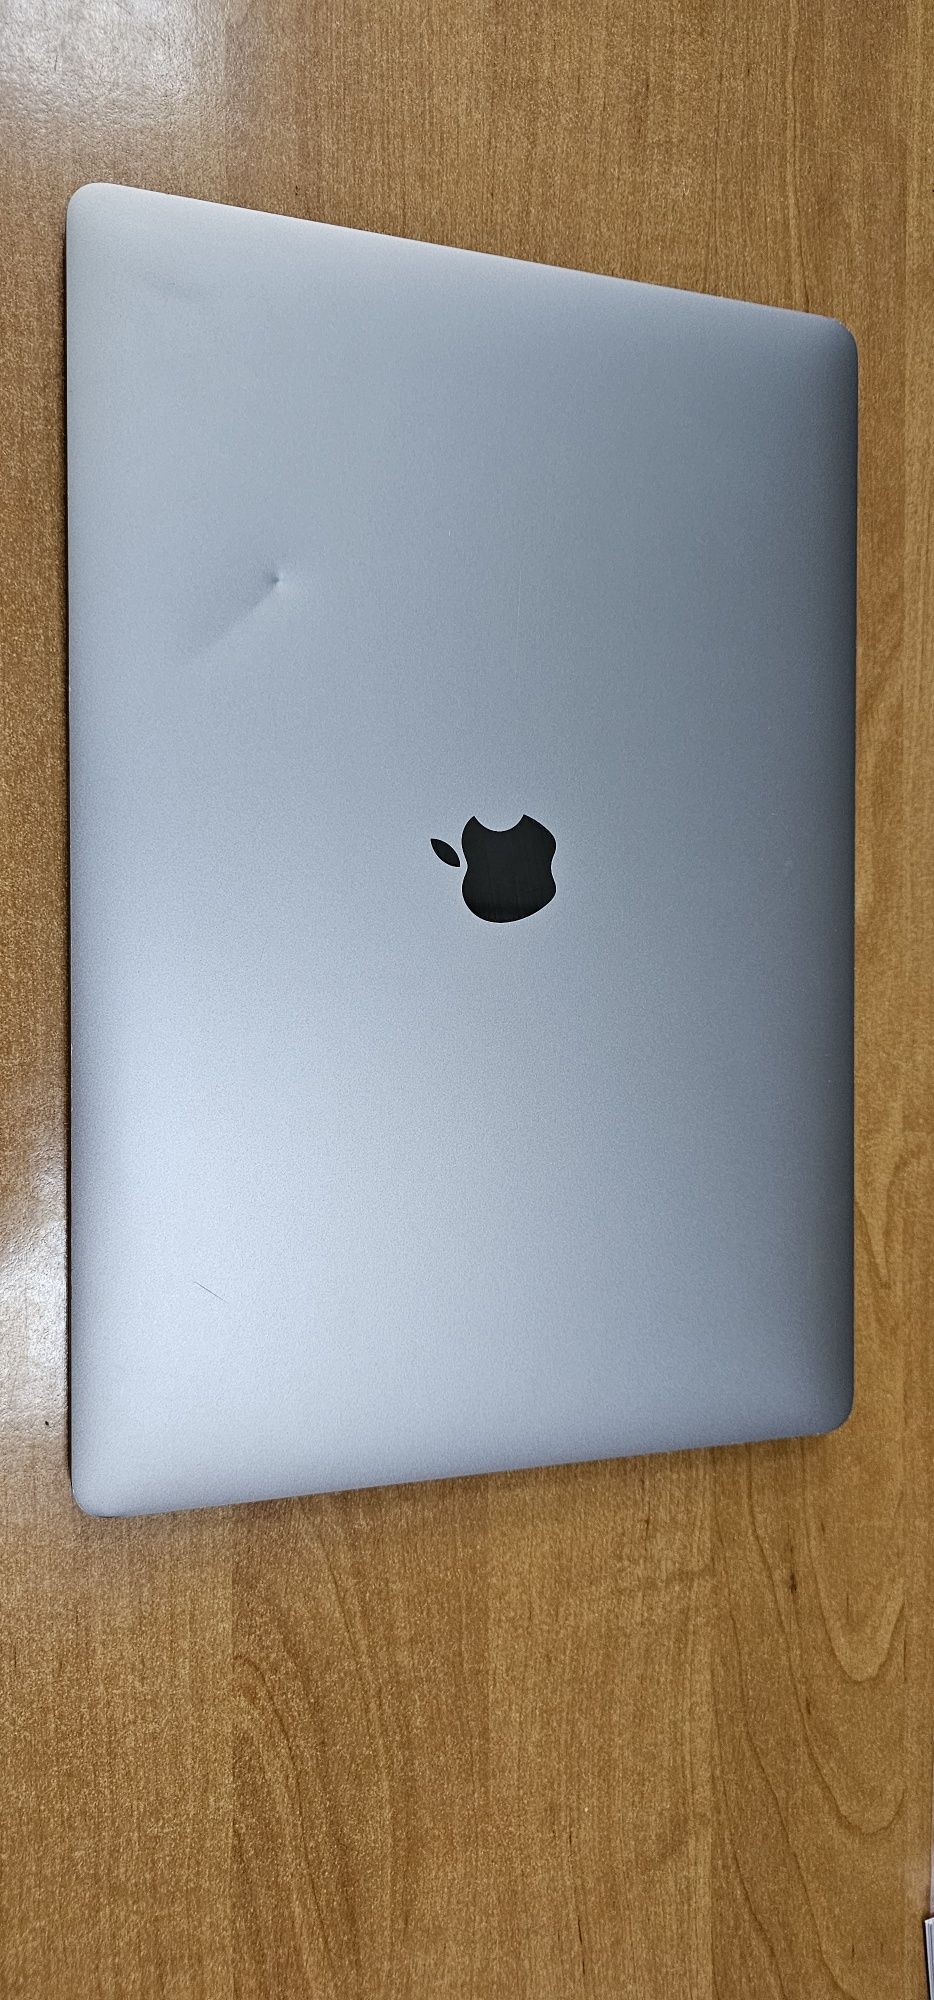 Macbook Pro 15“ 2016 i7/16gb/512gb Ssd Space Gray